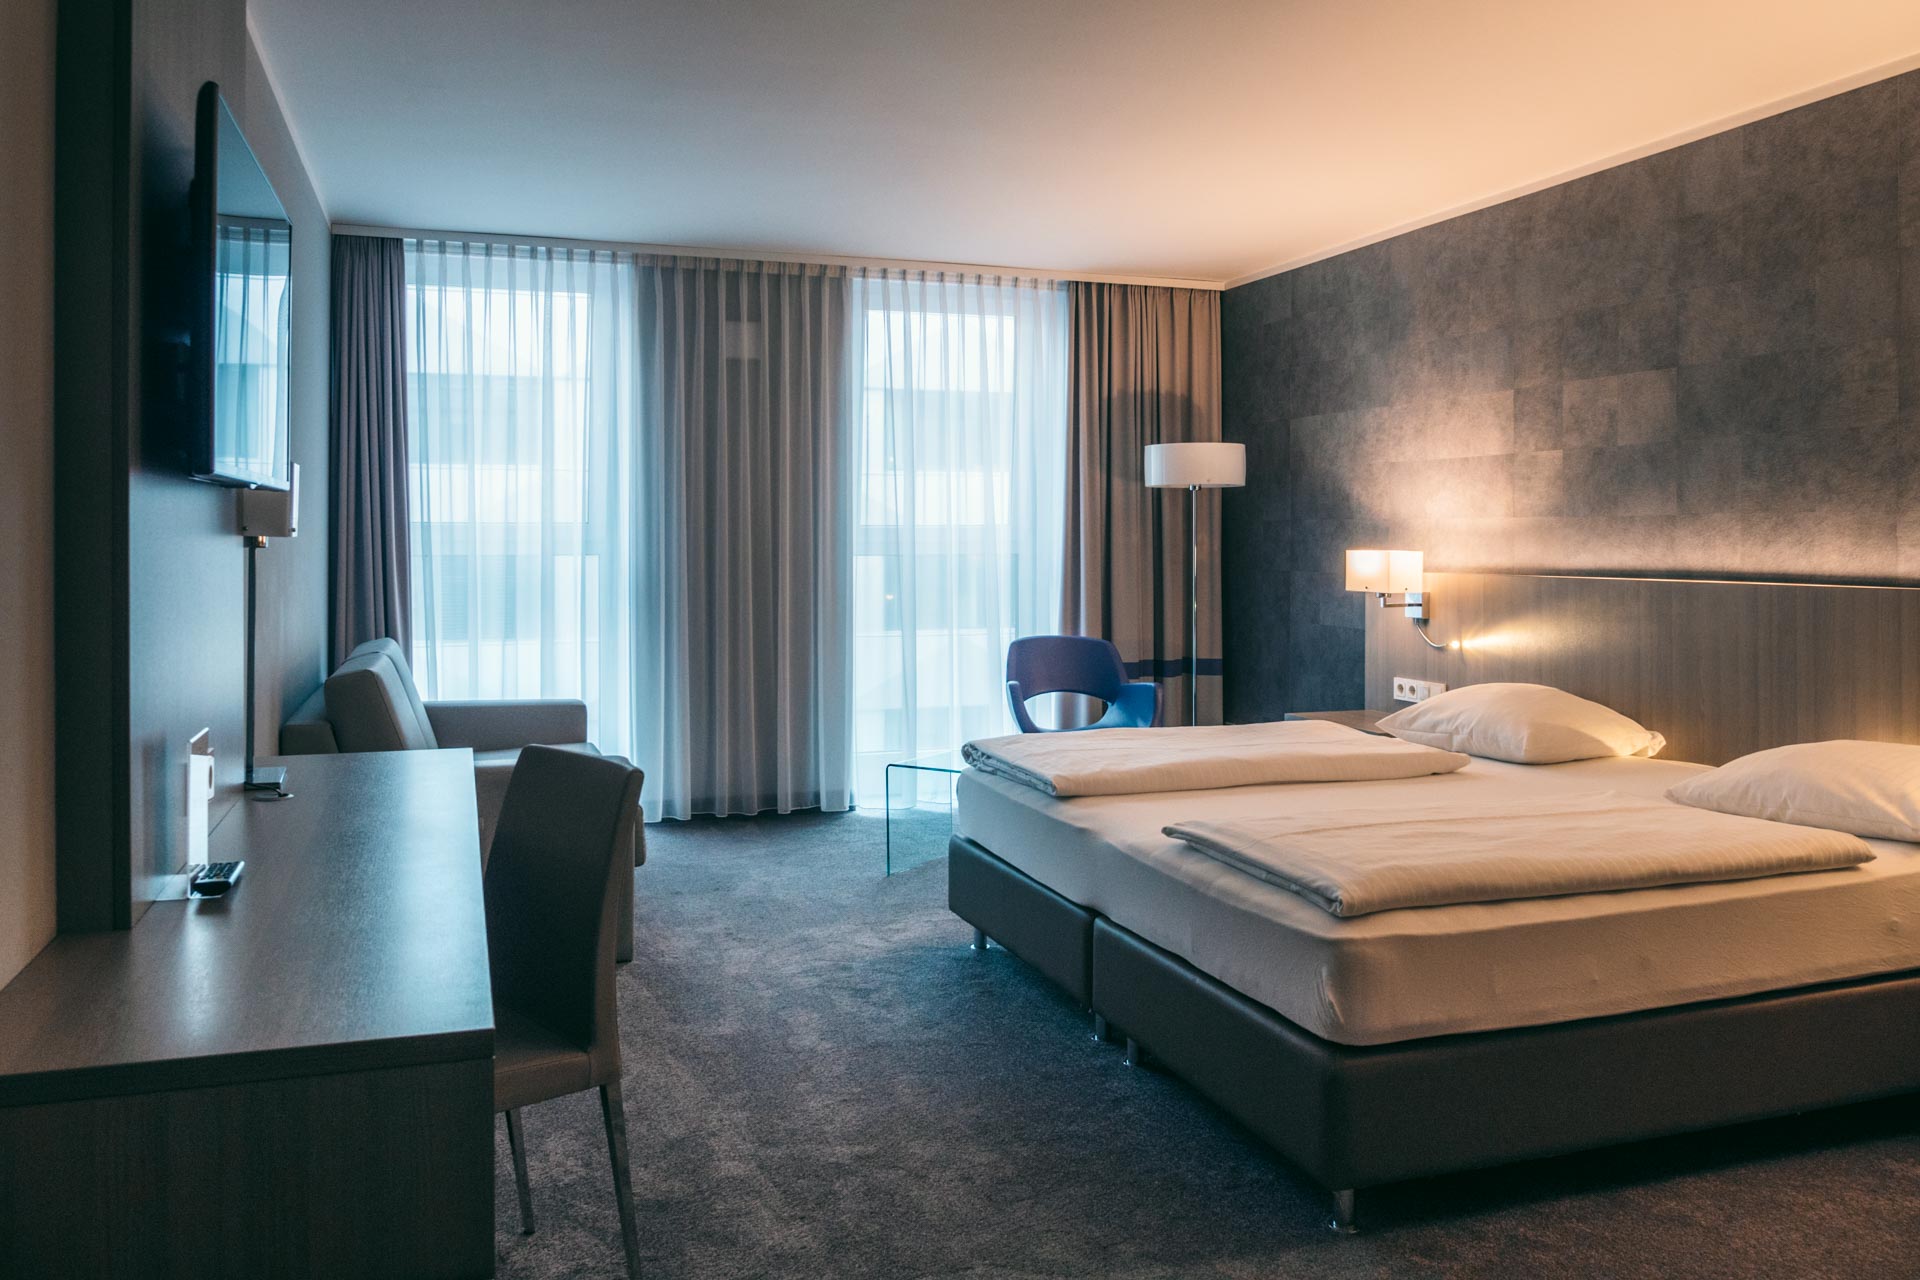 Review of Relexa Hotel in Munich: Modern Vegan-Friendly Rooms in Bavaria, Germany